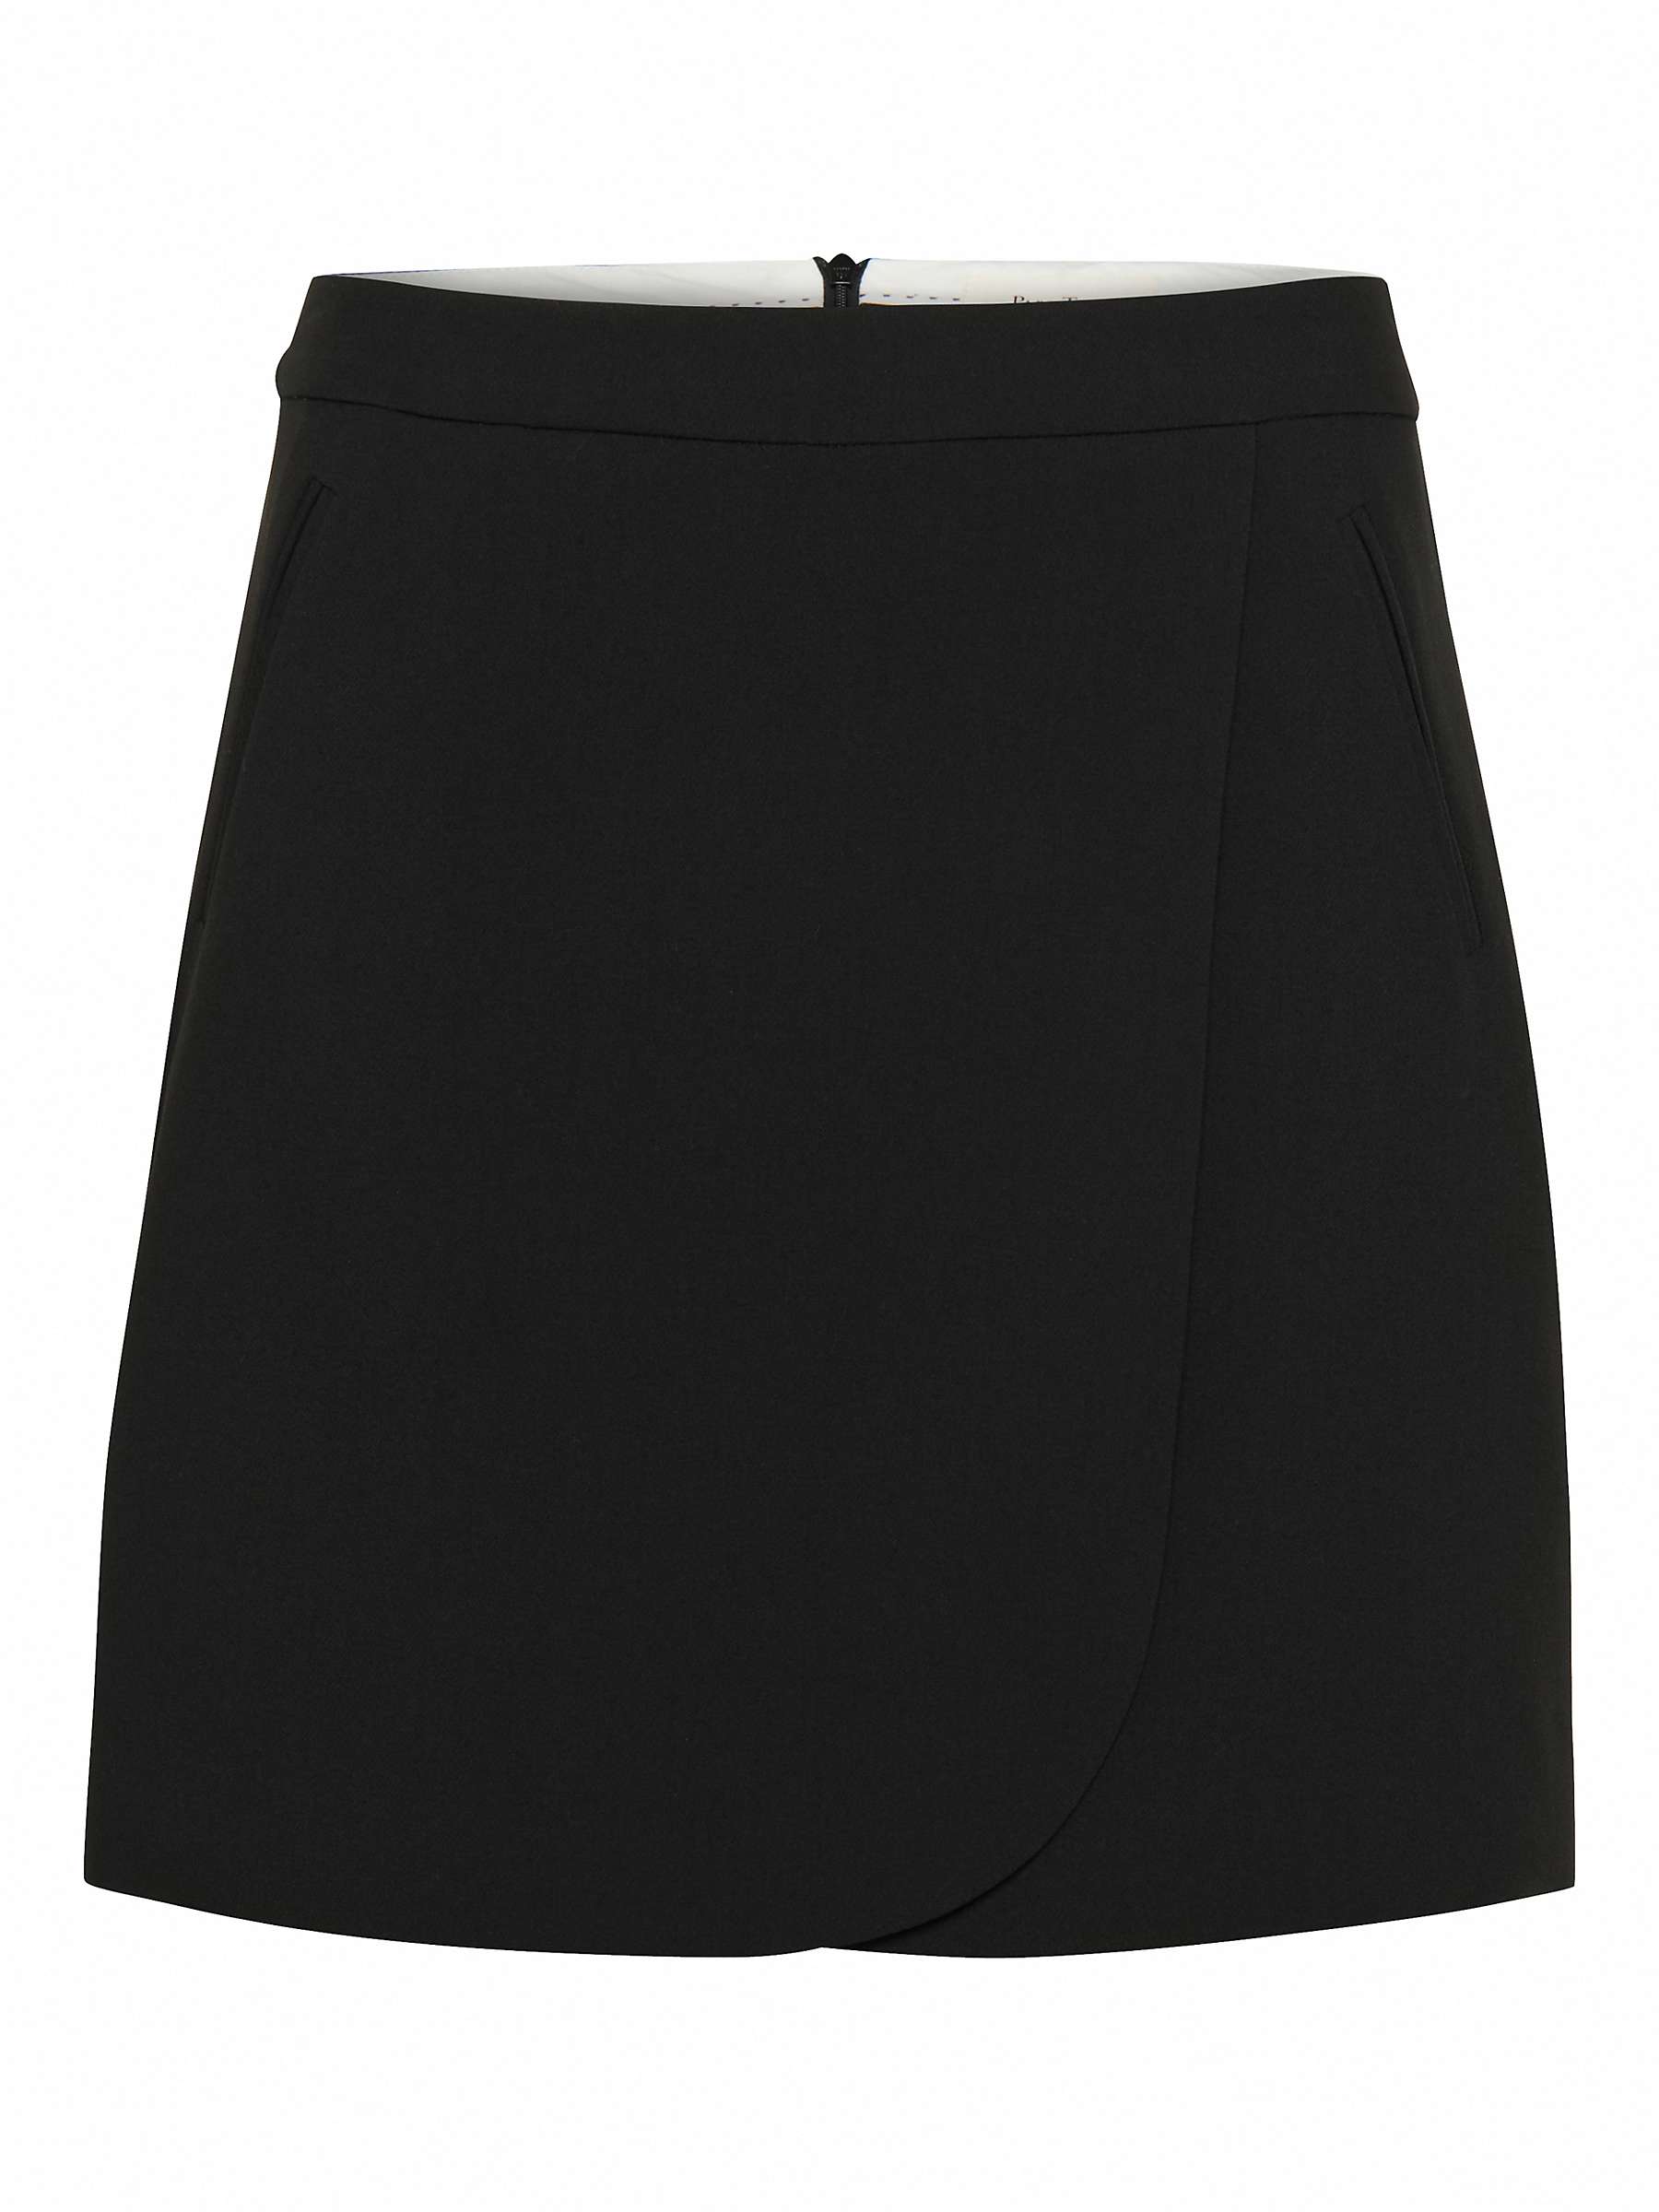 Buy Part Two Eirika Classic A-Line Mini Skirt, Black Online at johnlewis.com